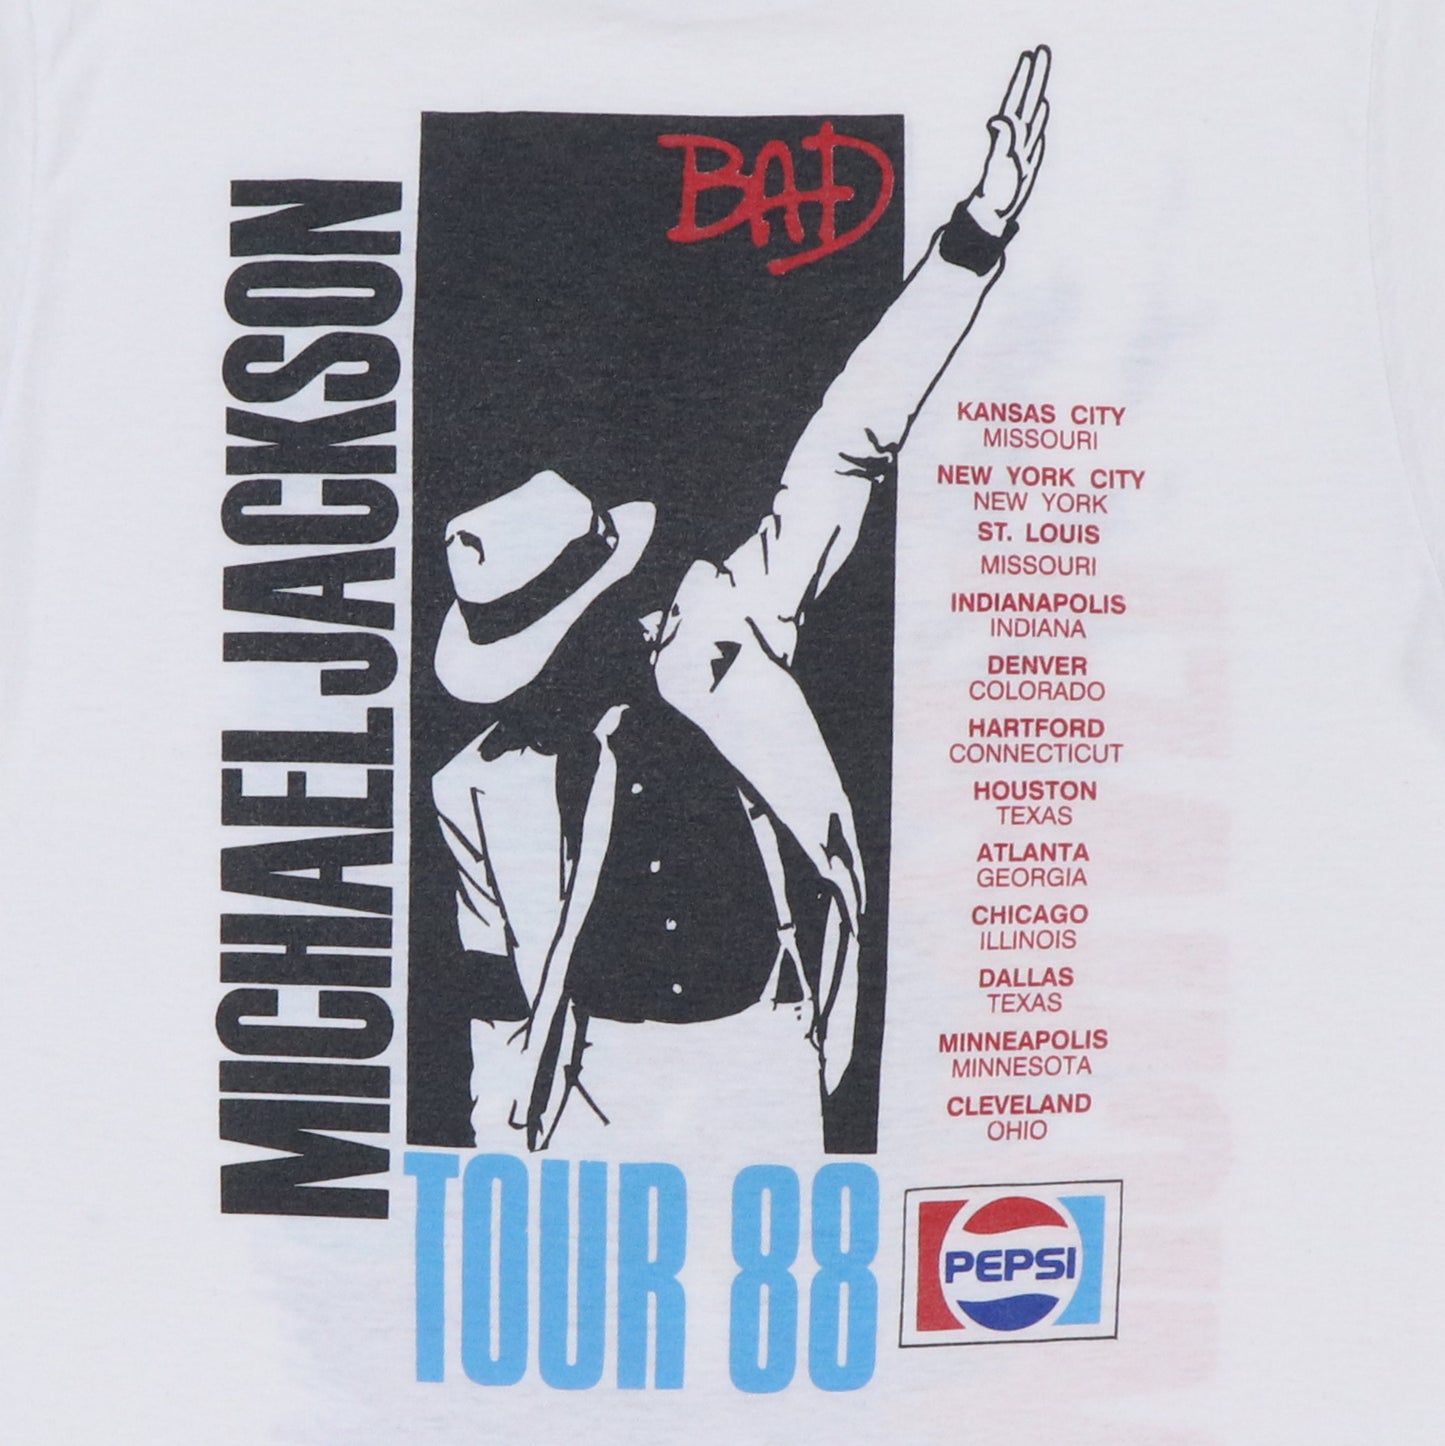 1988 Michael Jackson Bad Tour Shirt